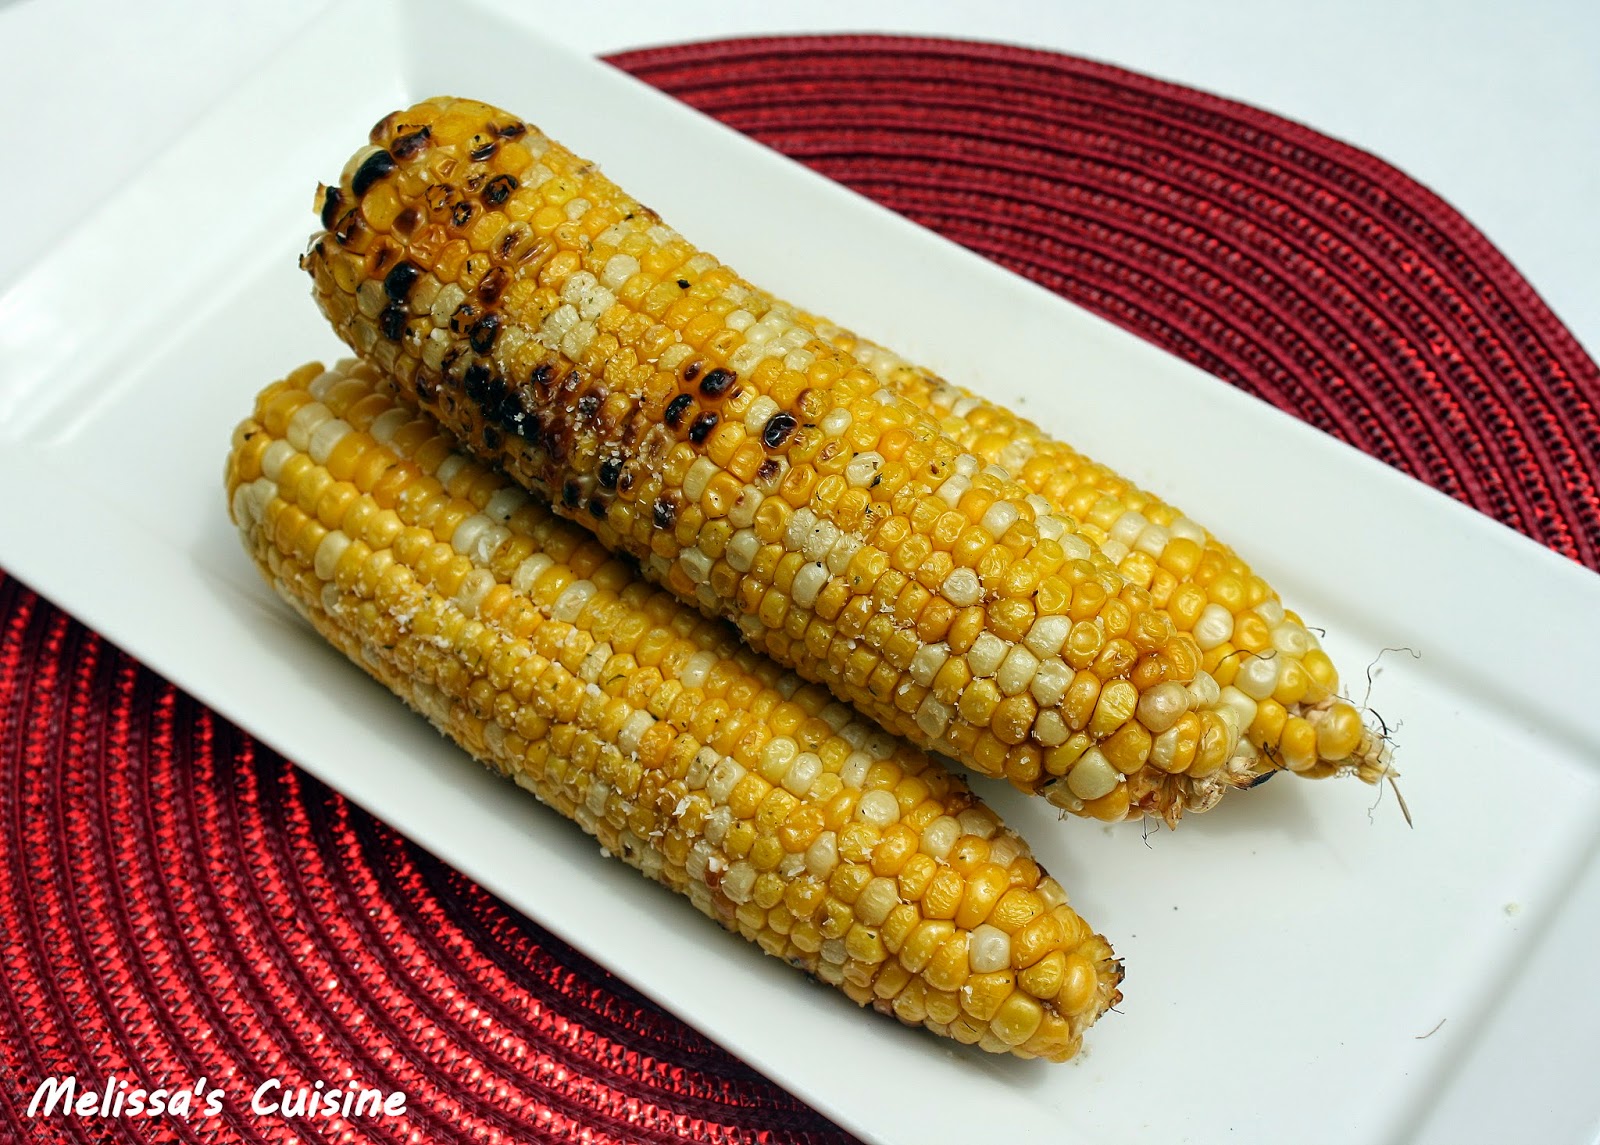 Melissa's Cuisine: Grilled Corn {Flashback Friday}